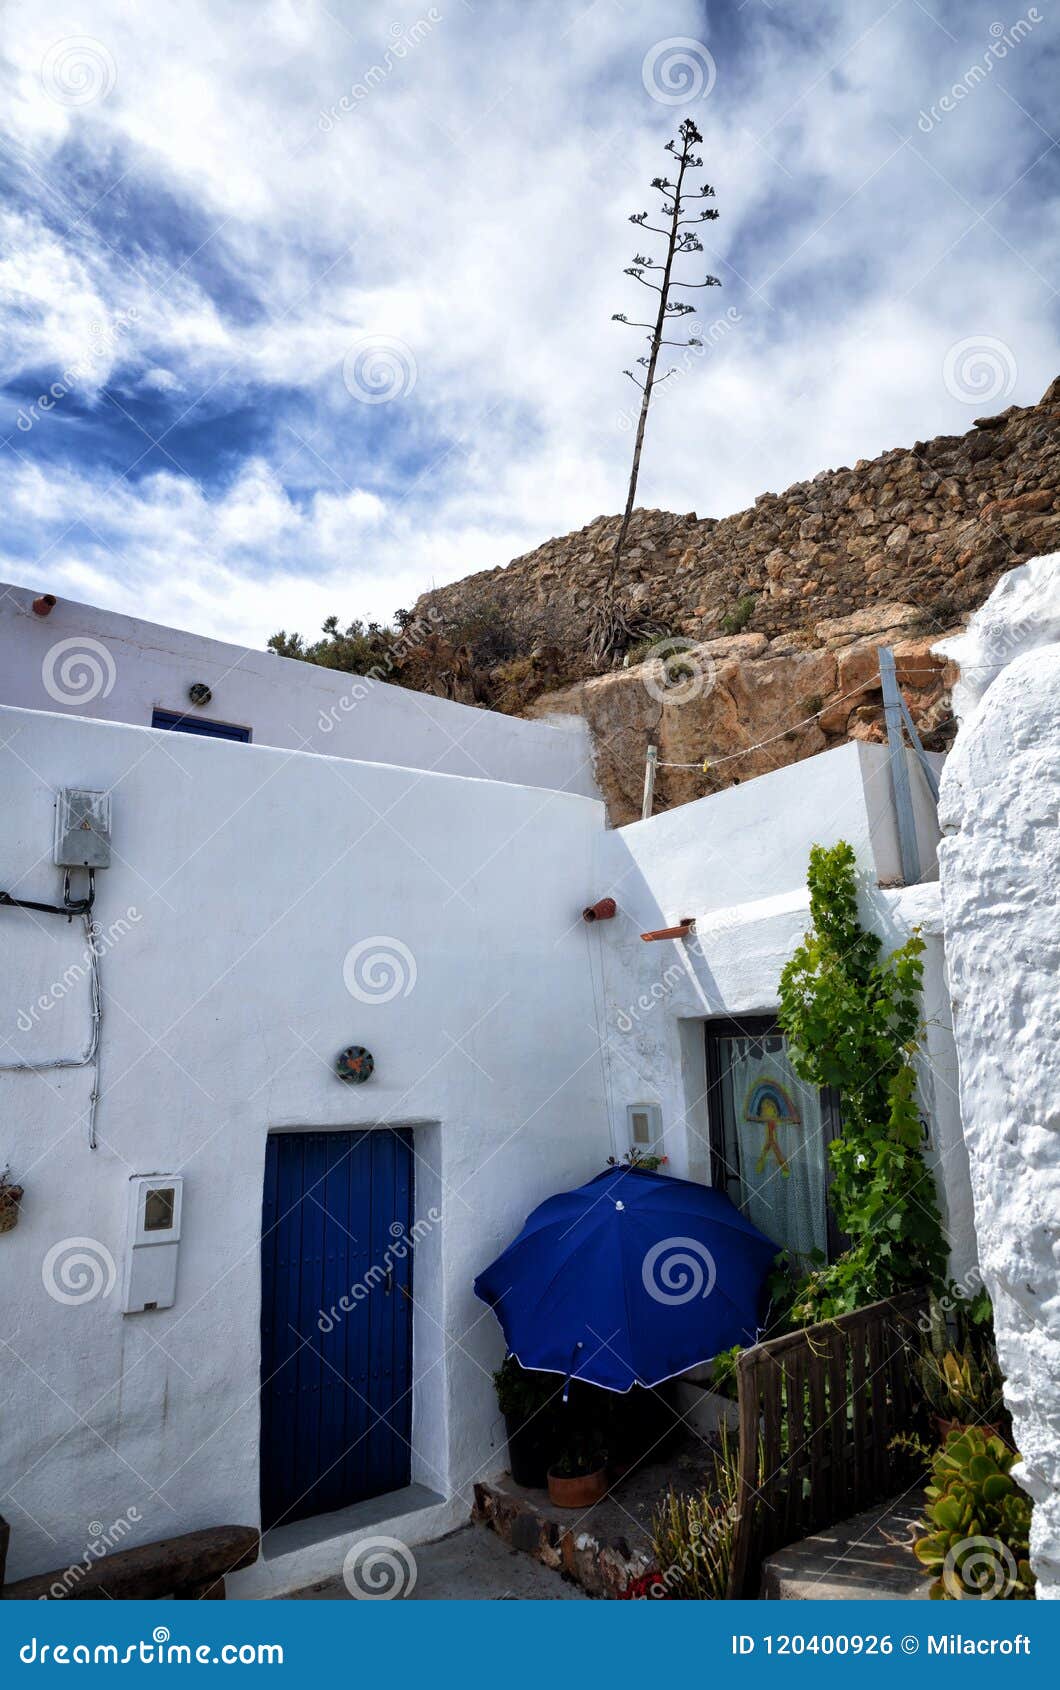 village of nijar, almeria province, andalusia, spain